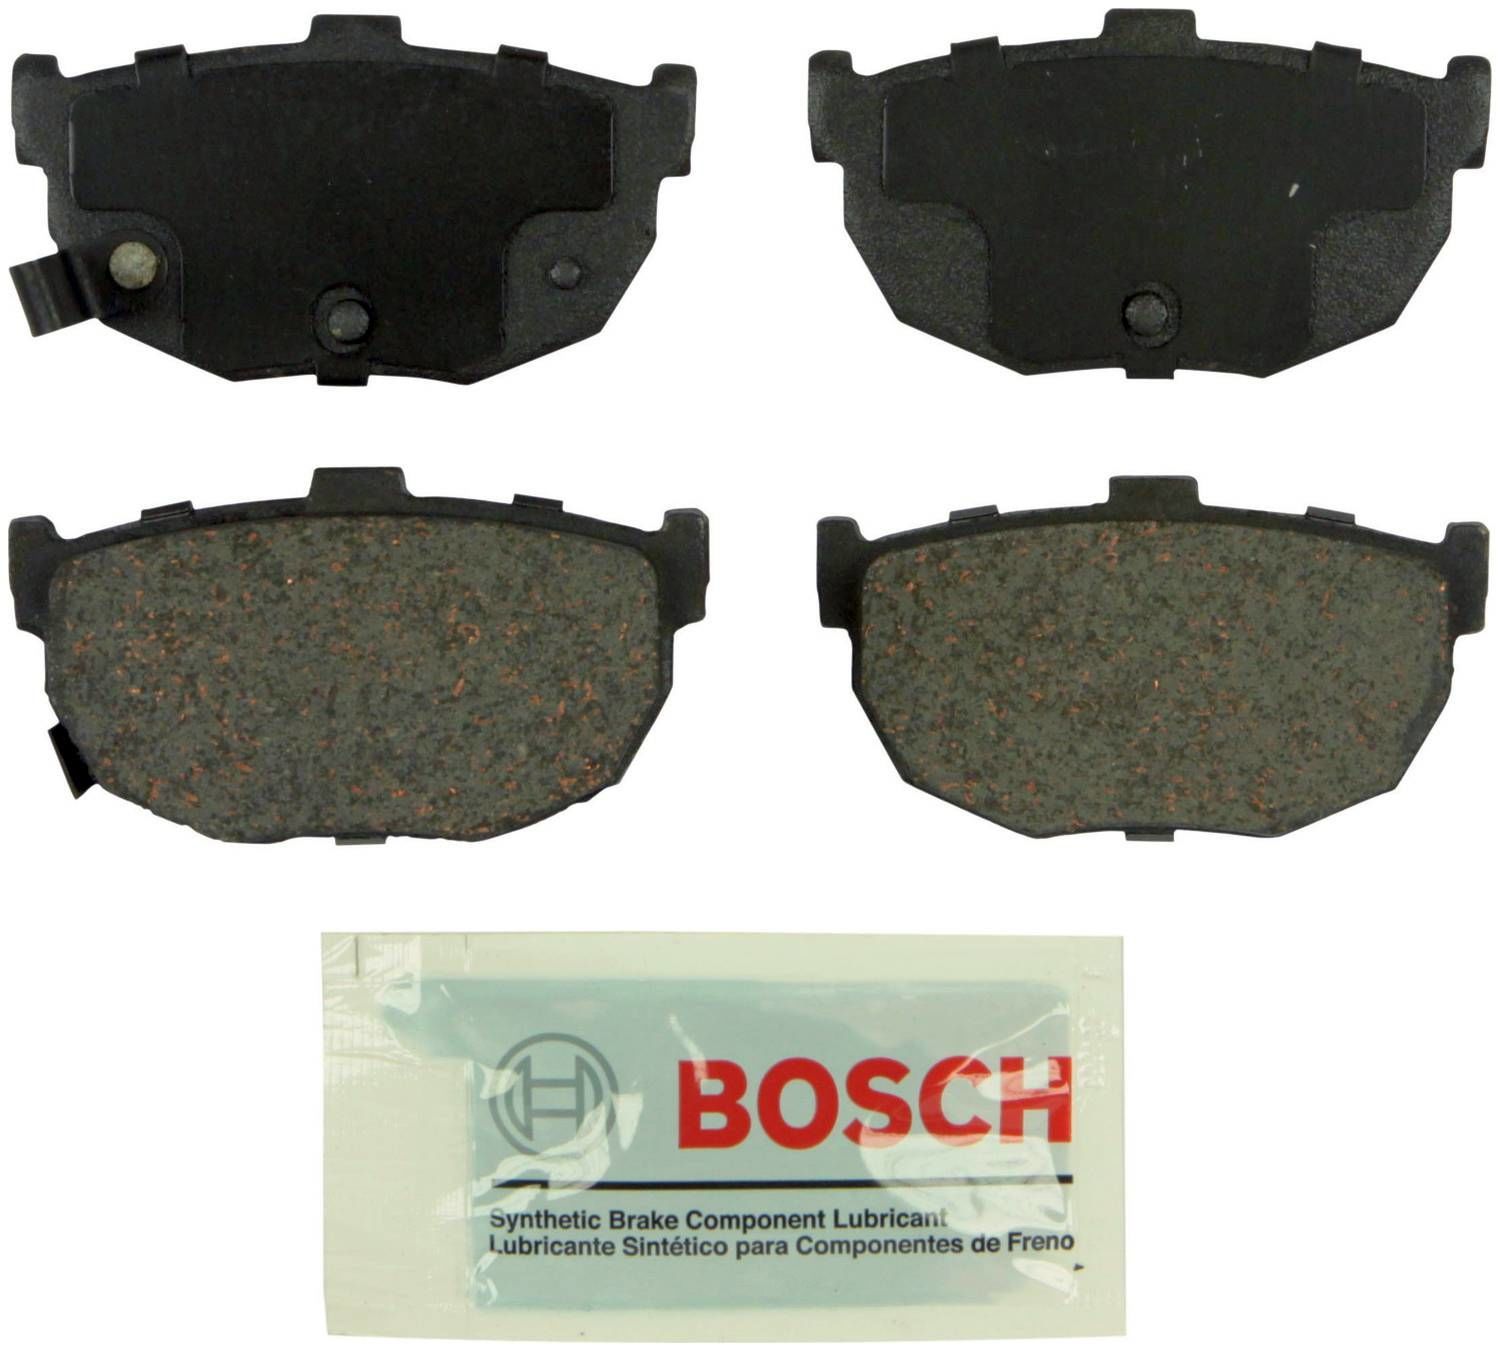 BOSCH BRAKE - Bosch Blue Ceramic Brake Pads (Rear) - BQC BE464